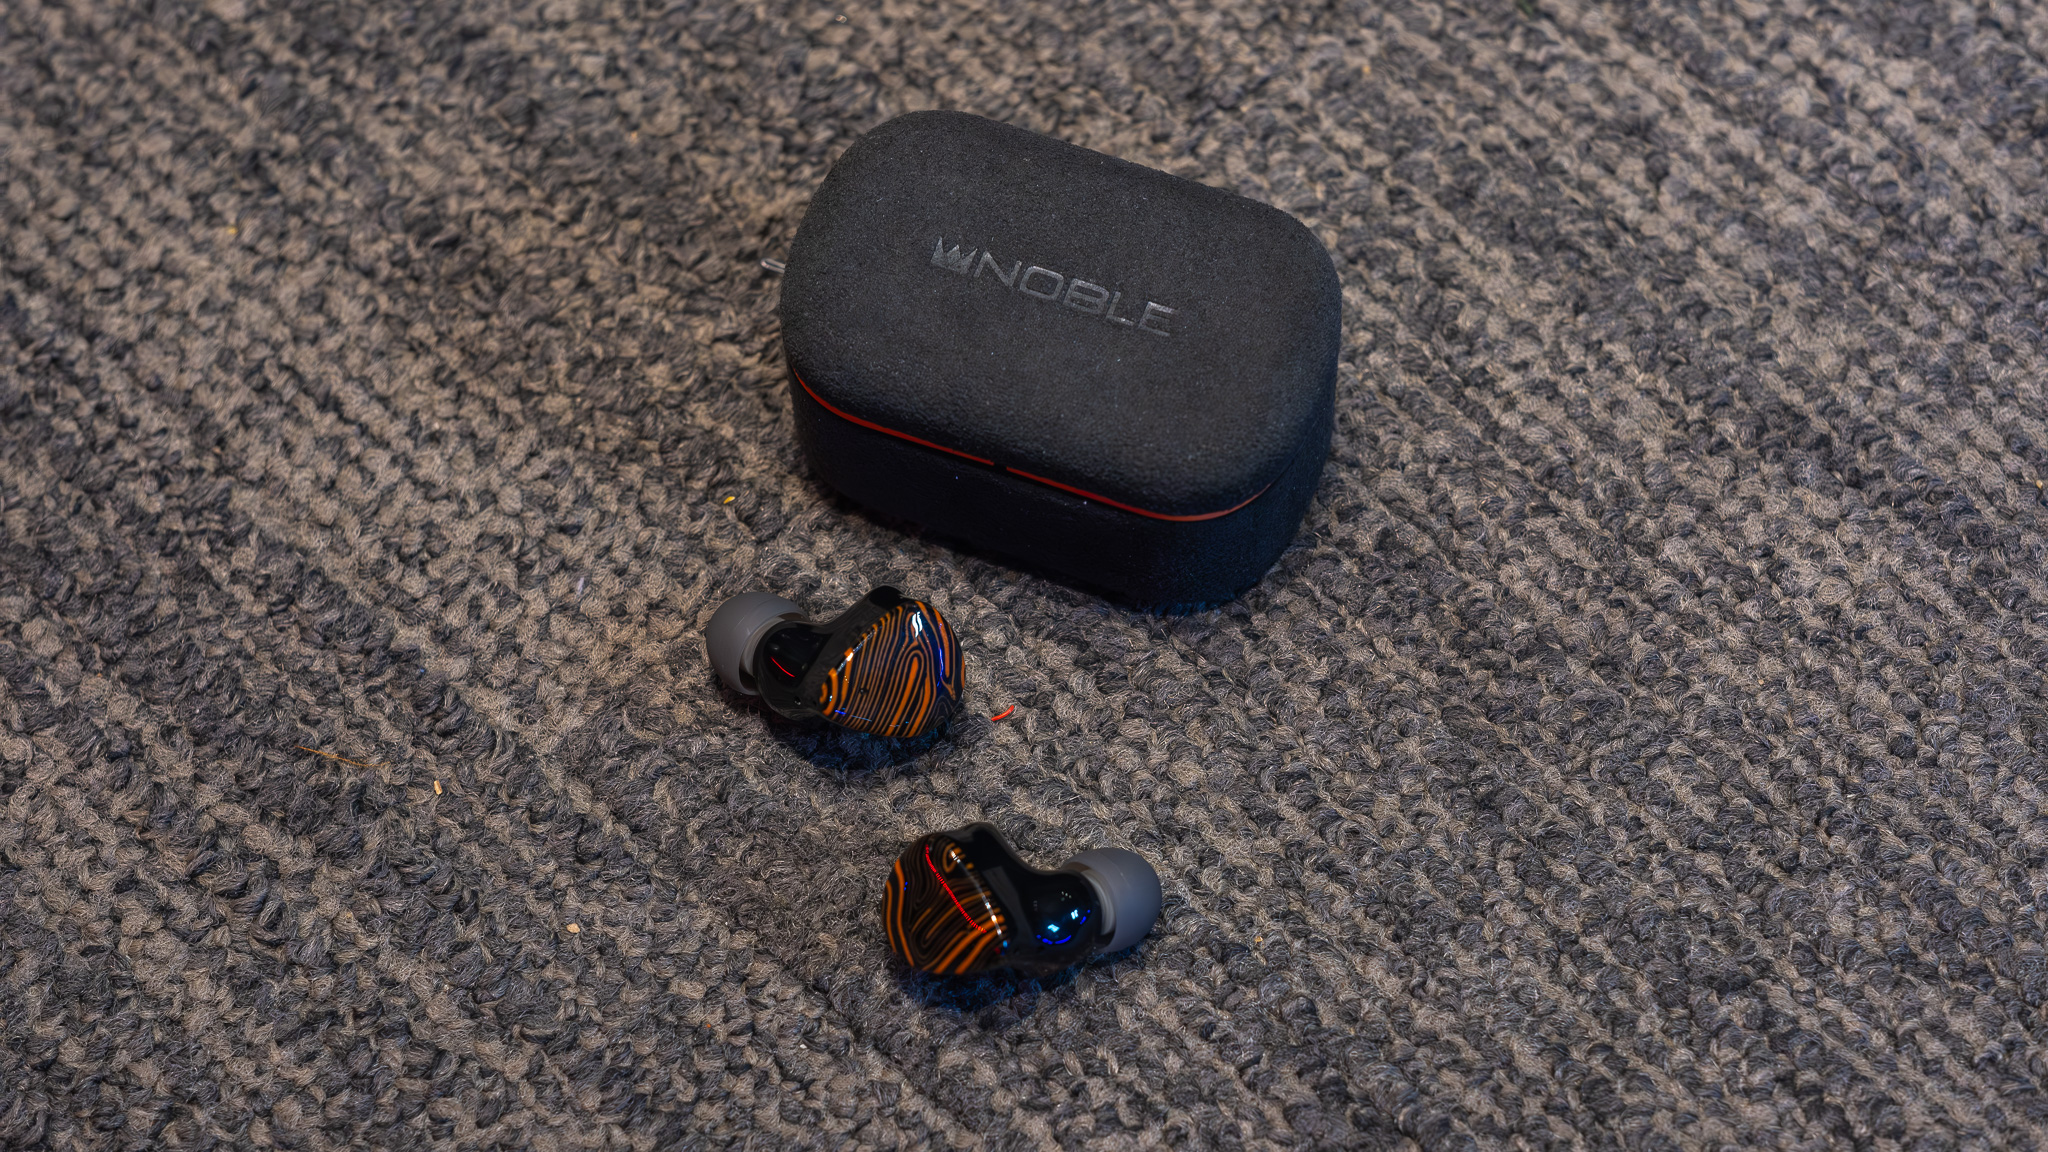 tinhte-noble-fokus-triumph-tai-nghe-audio-true-wireless-bluetooth-earphones6.jpg